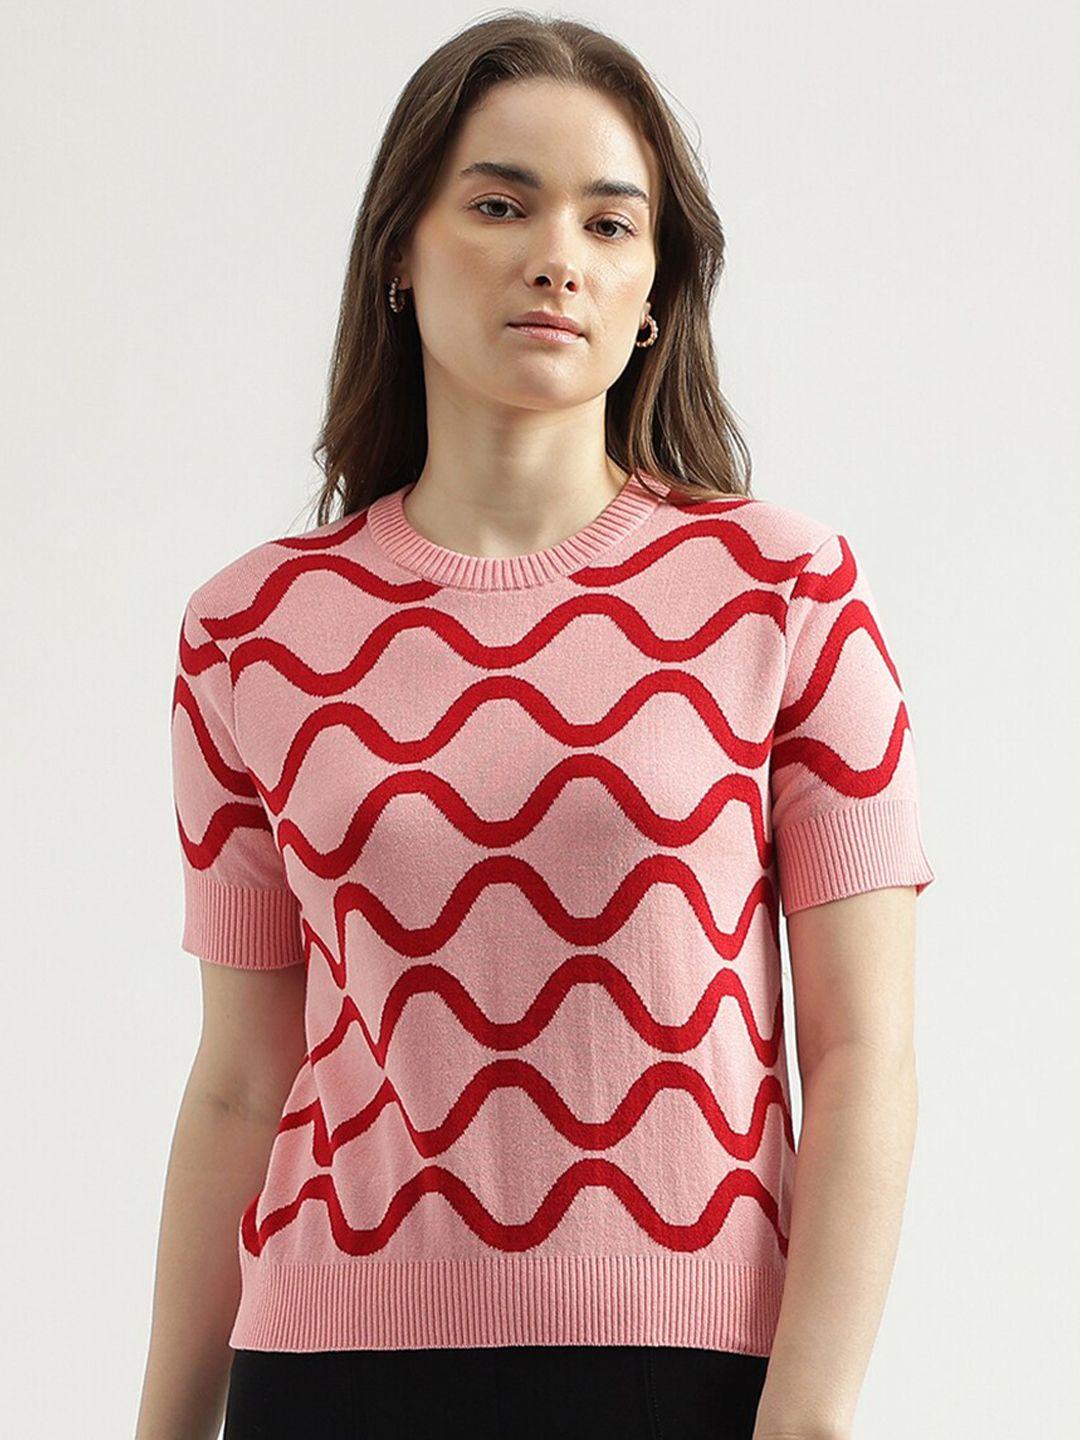 united-colors-of-benetton-geometric-self-design-cotton-pullover